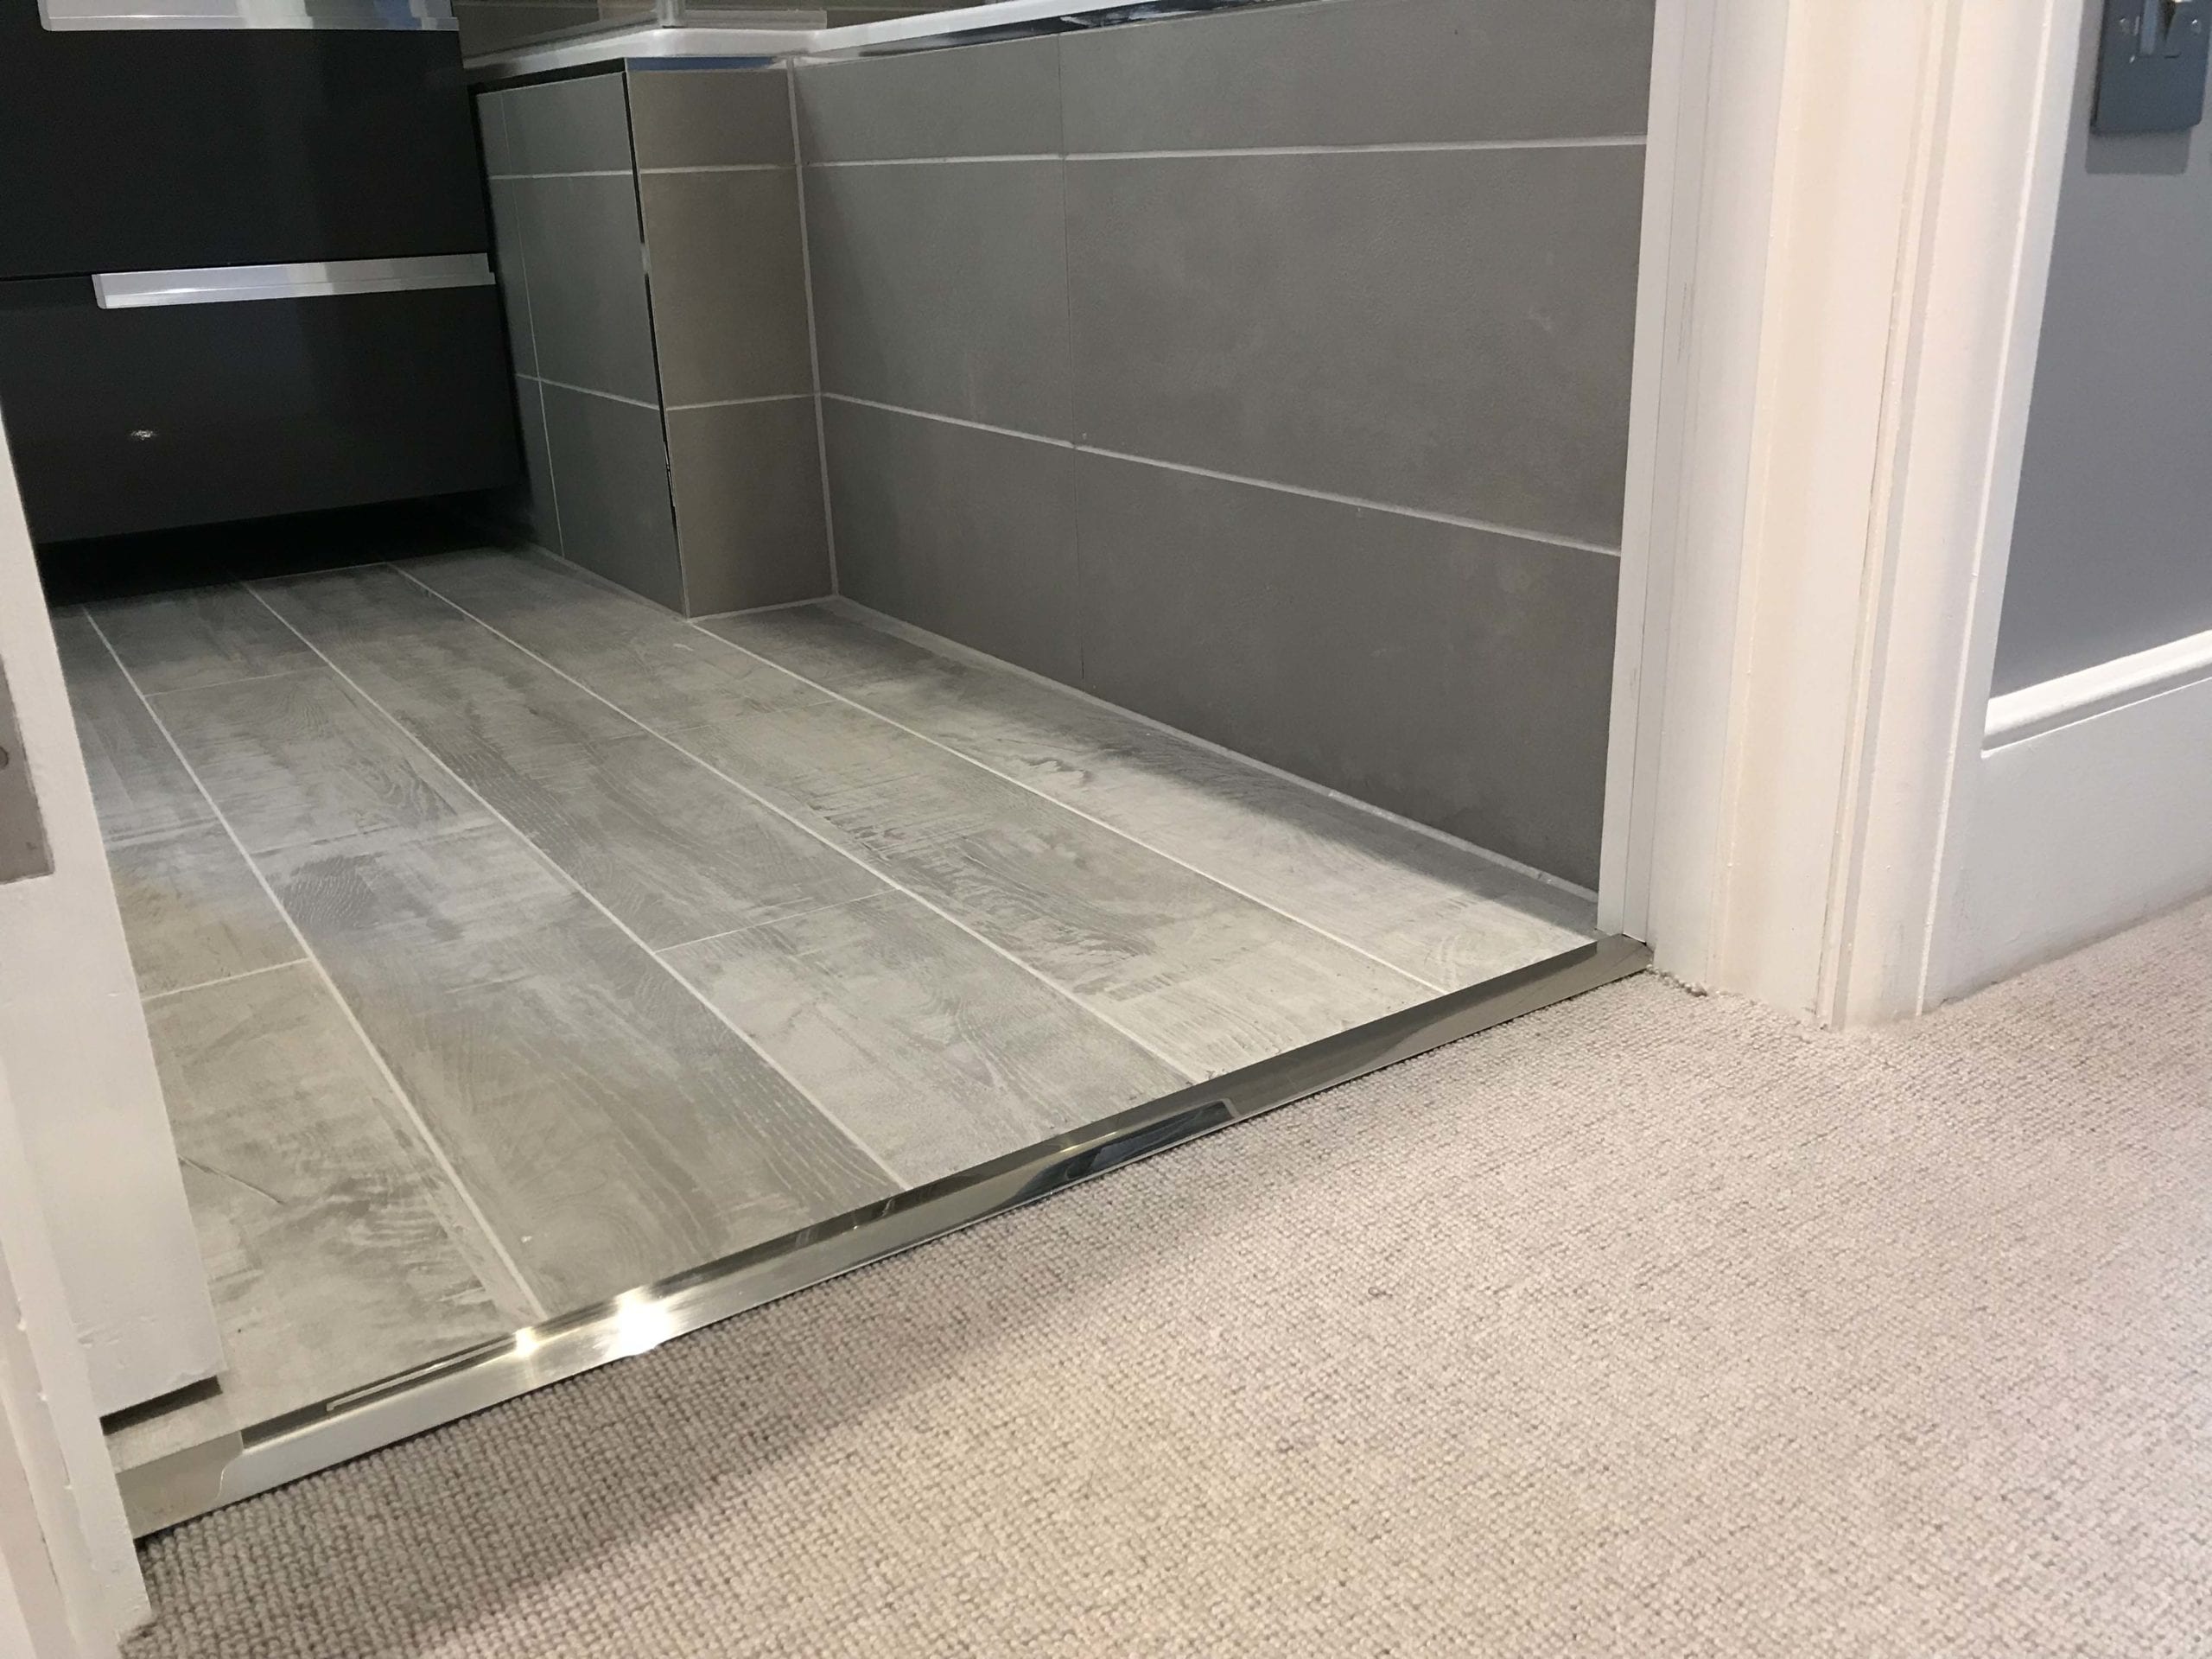 Premier Single door bar fitted in bathroom